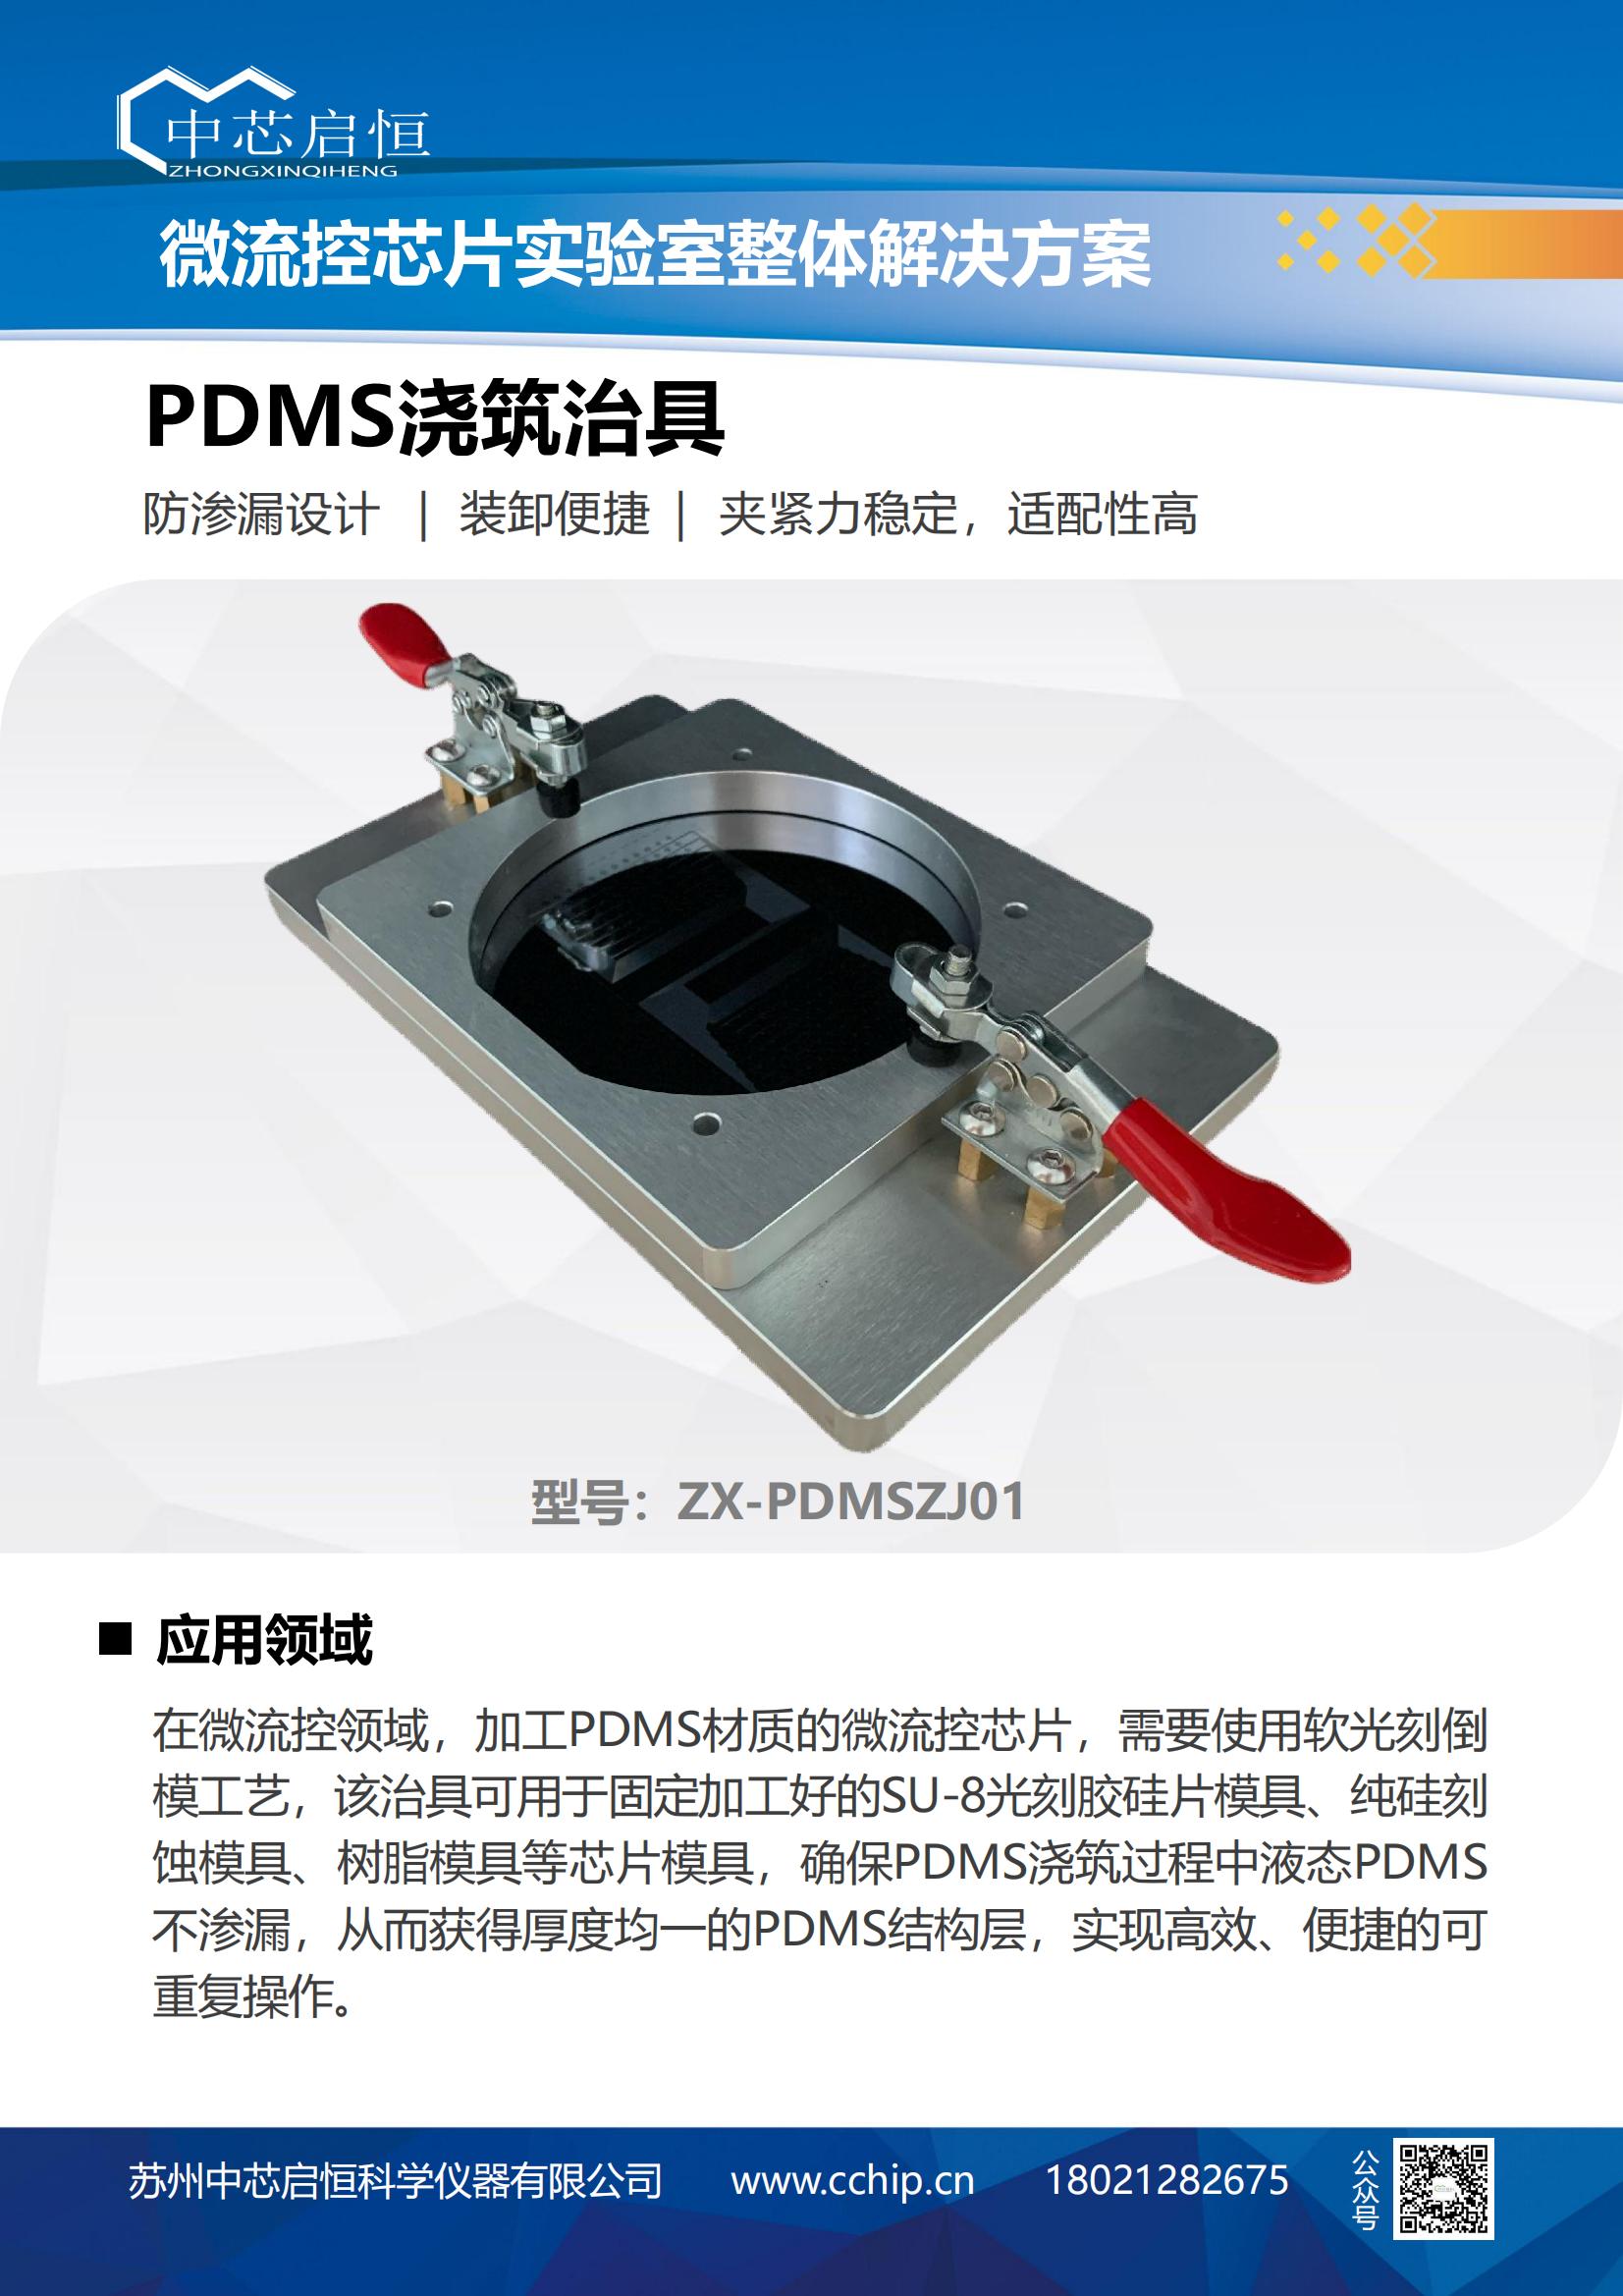 6.1 PDMS浇筑治具ZX-PDMSZJ01 - 小册子打印版本_00 (1).jpg